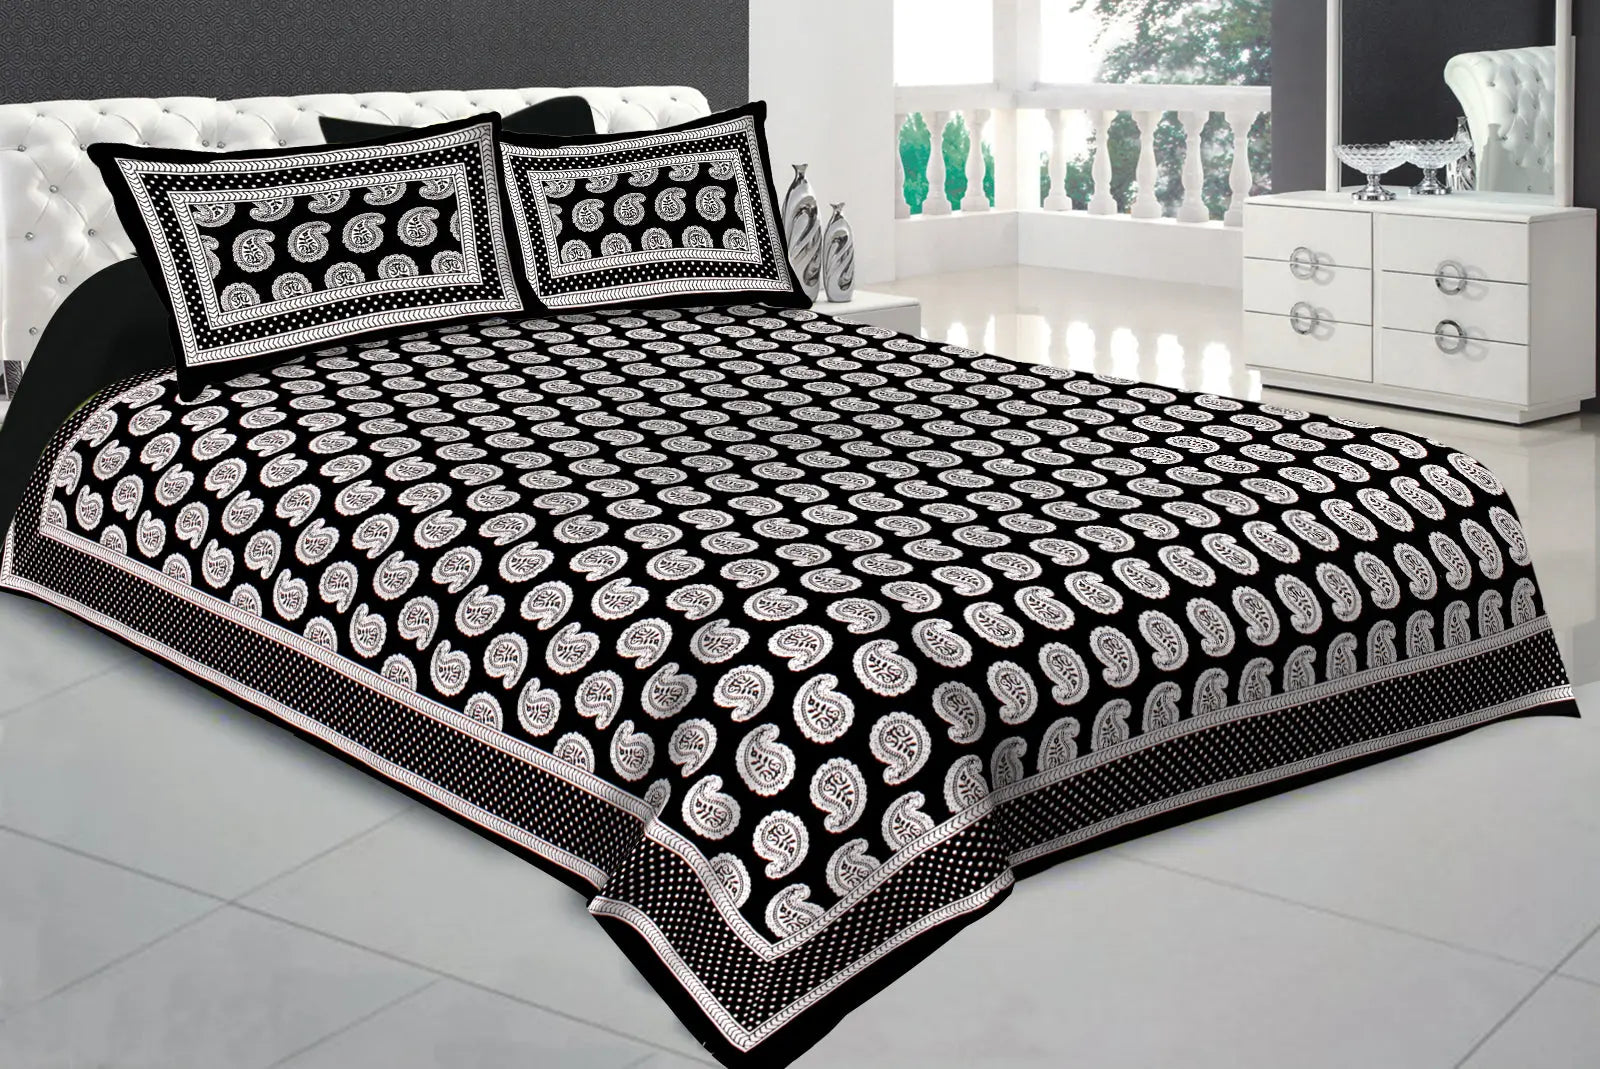 Jaipuri Modest Black and White Autoloom 100% Cotton Bedsheet 280-TC Cotton king Size Bedsheet With 2 Pillow Cover www.jaipurtohome.com